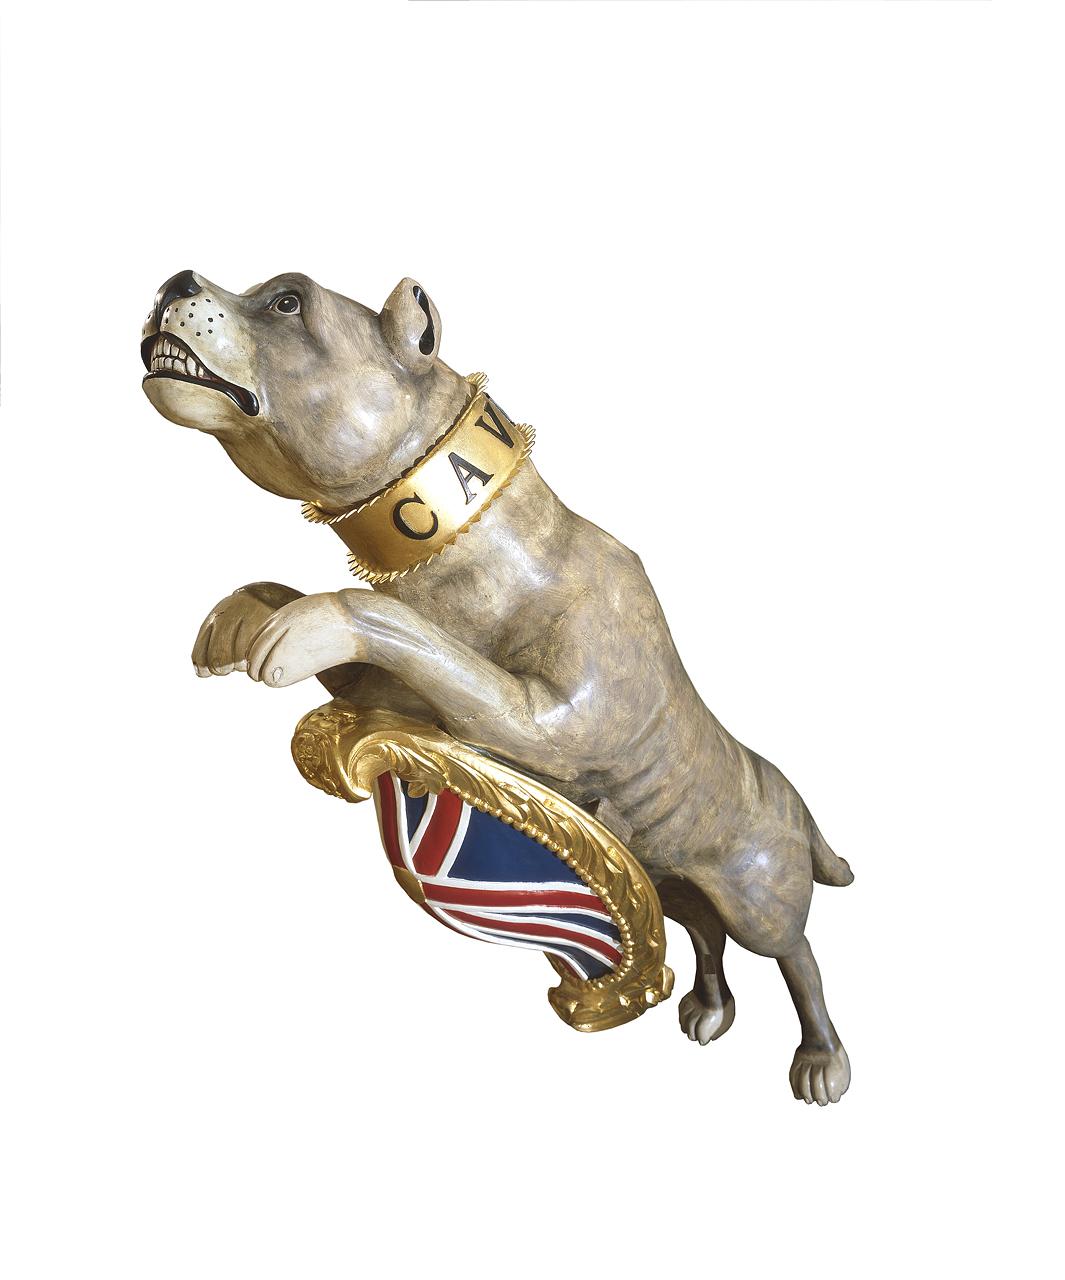 HMS bulldog figurehead